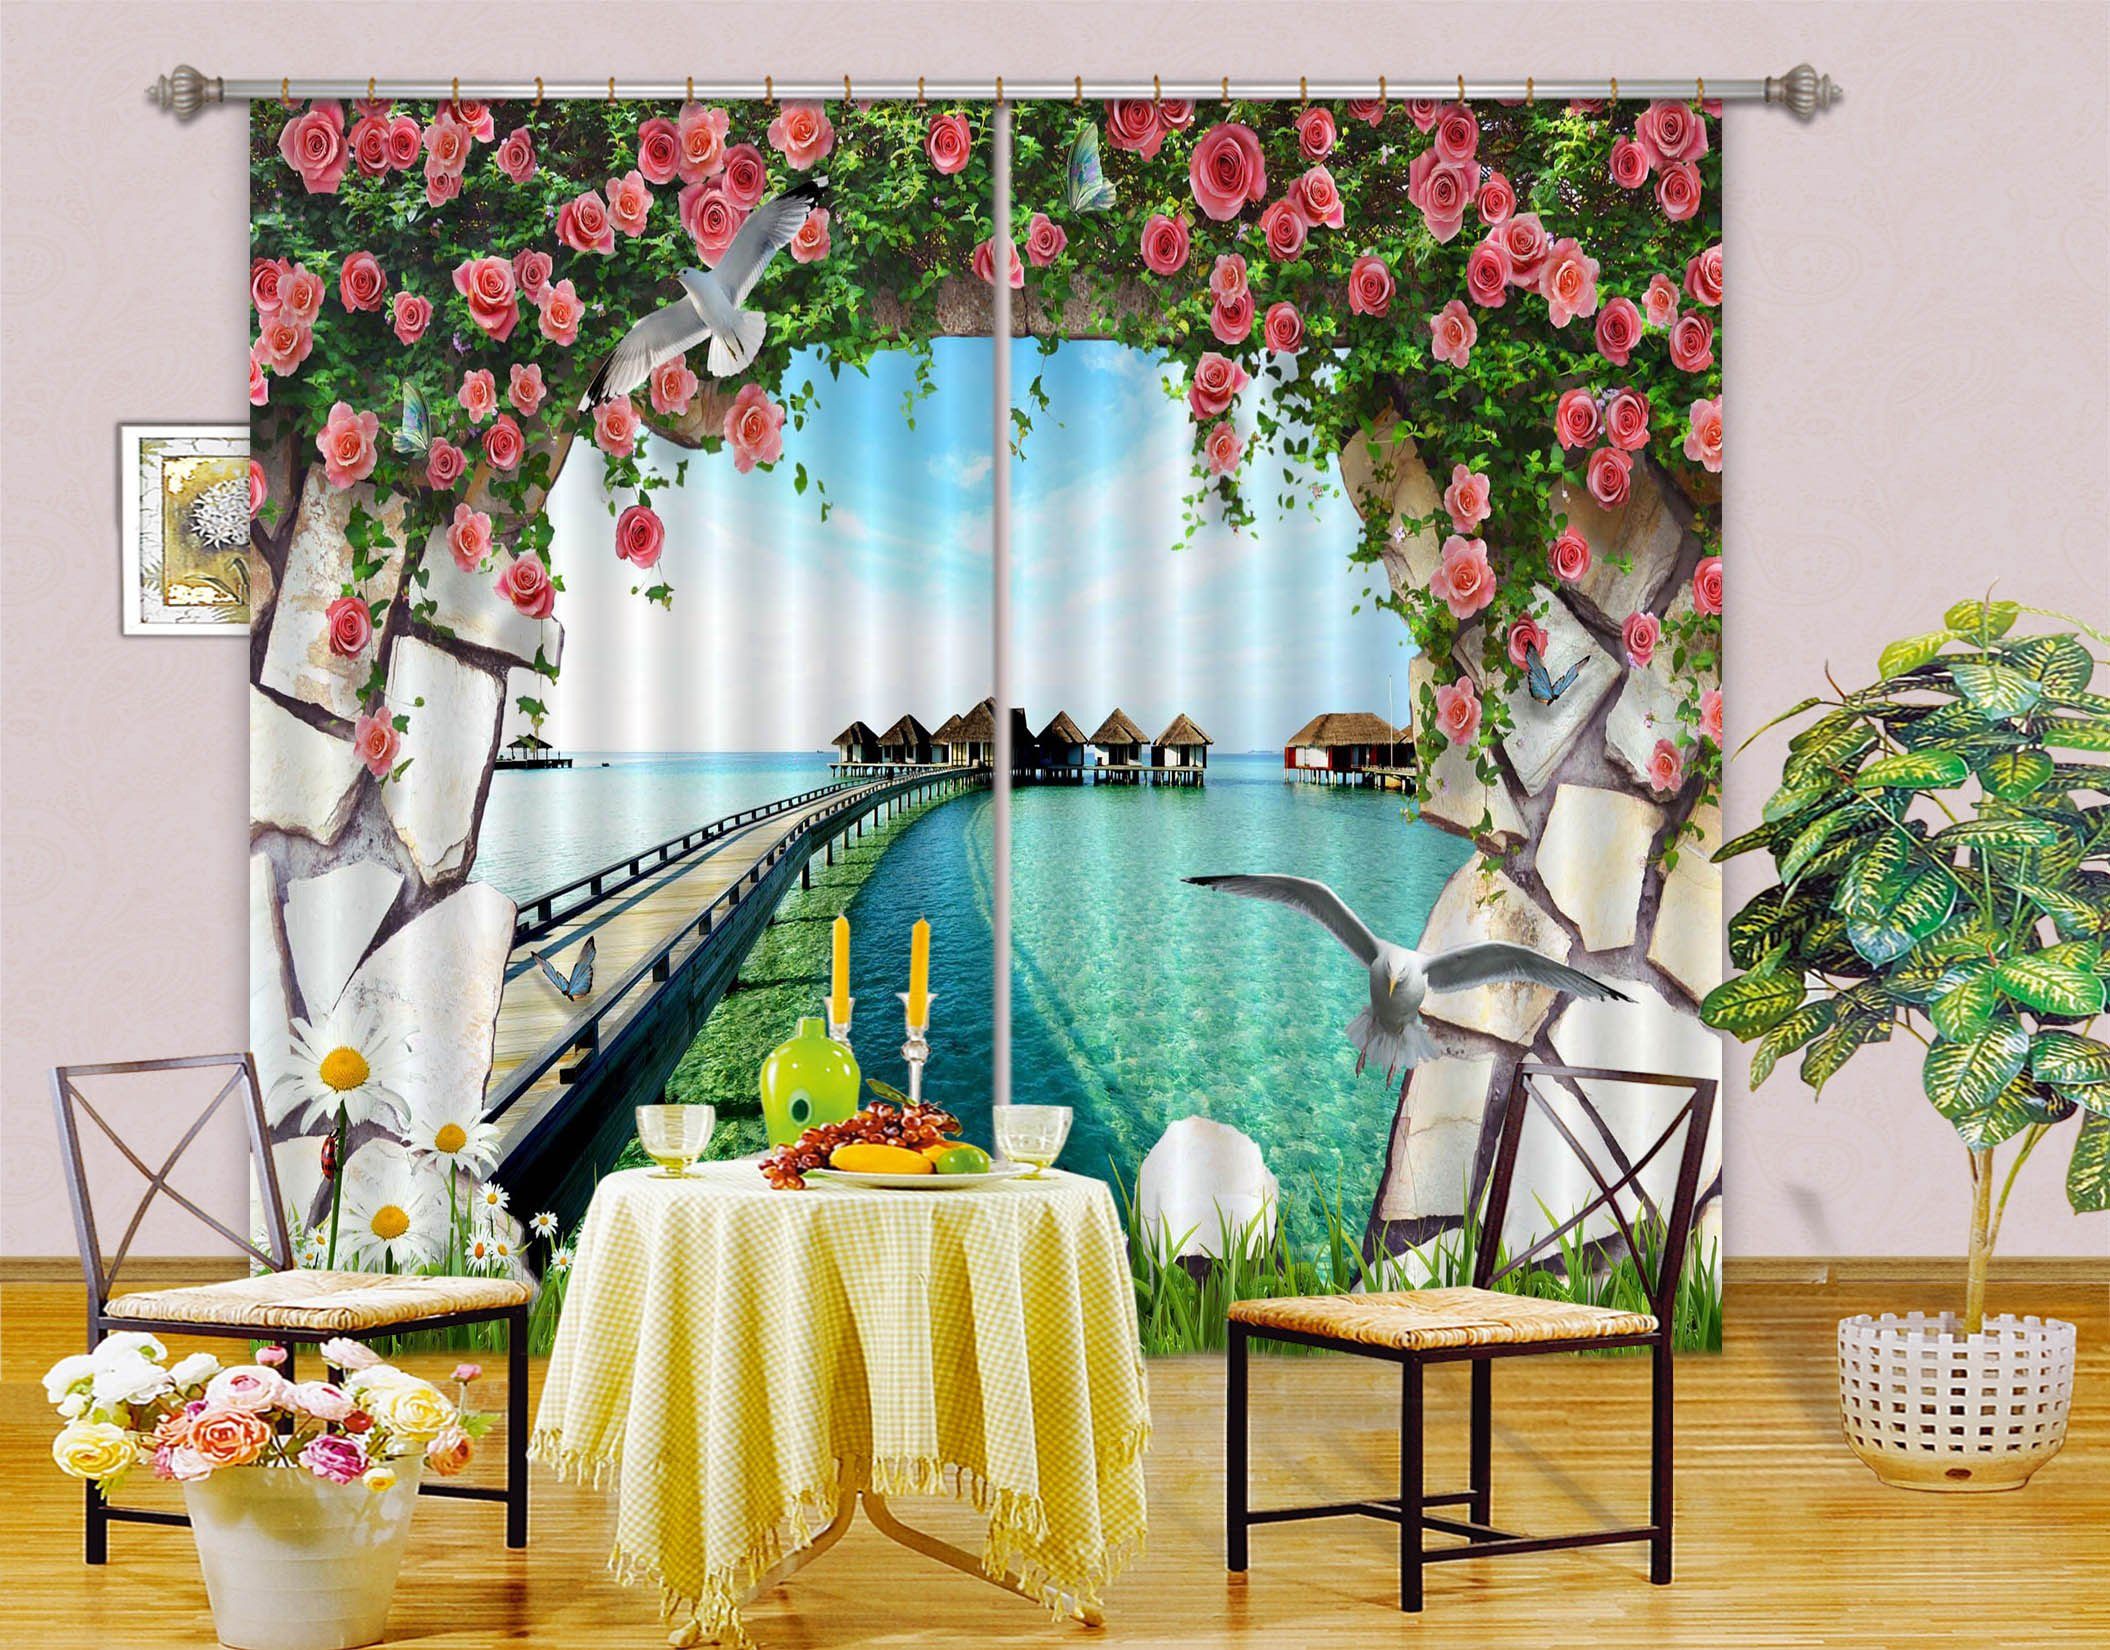 3D Flowers Hole Sea Scenery Curtains Drapes Wallpaper AJ Wallpaper 